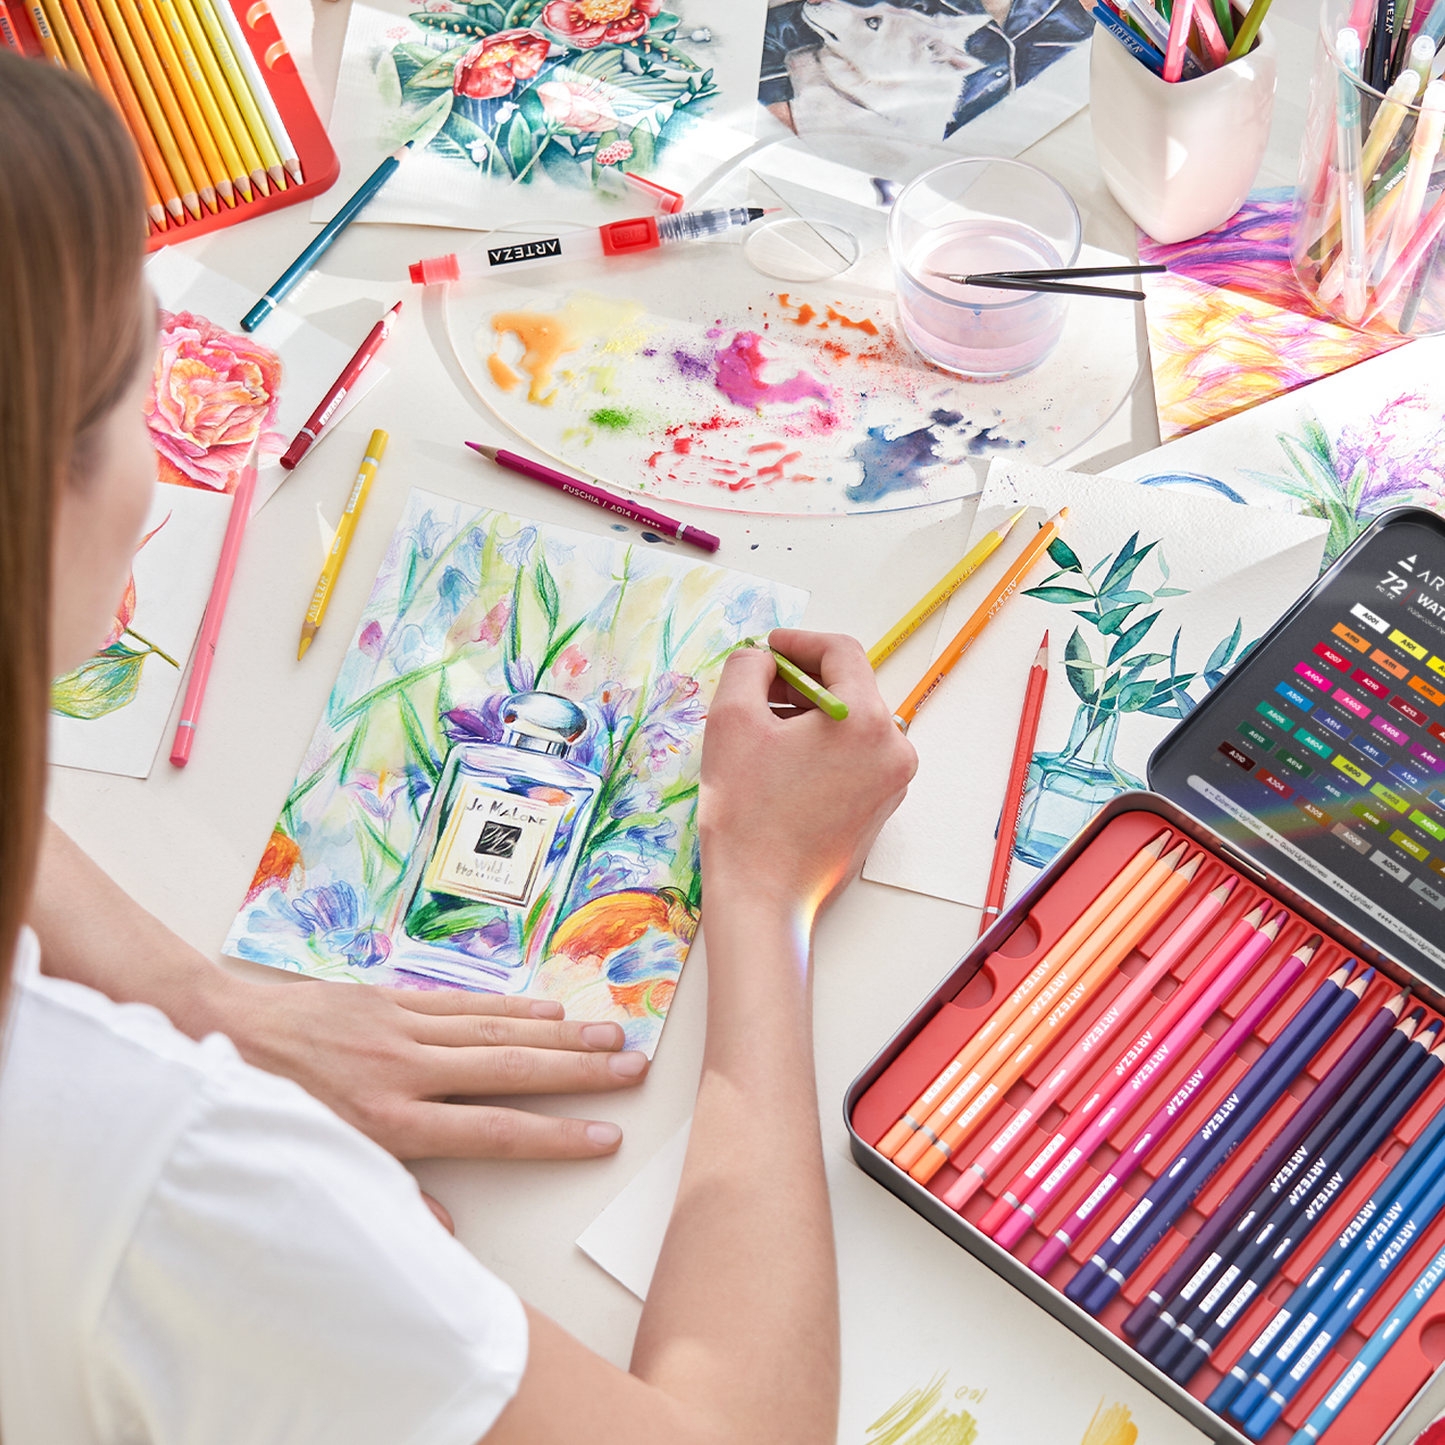 How to: Use Arteza Expert Watercolor Pencils & Premium Watercolor